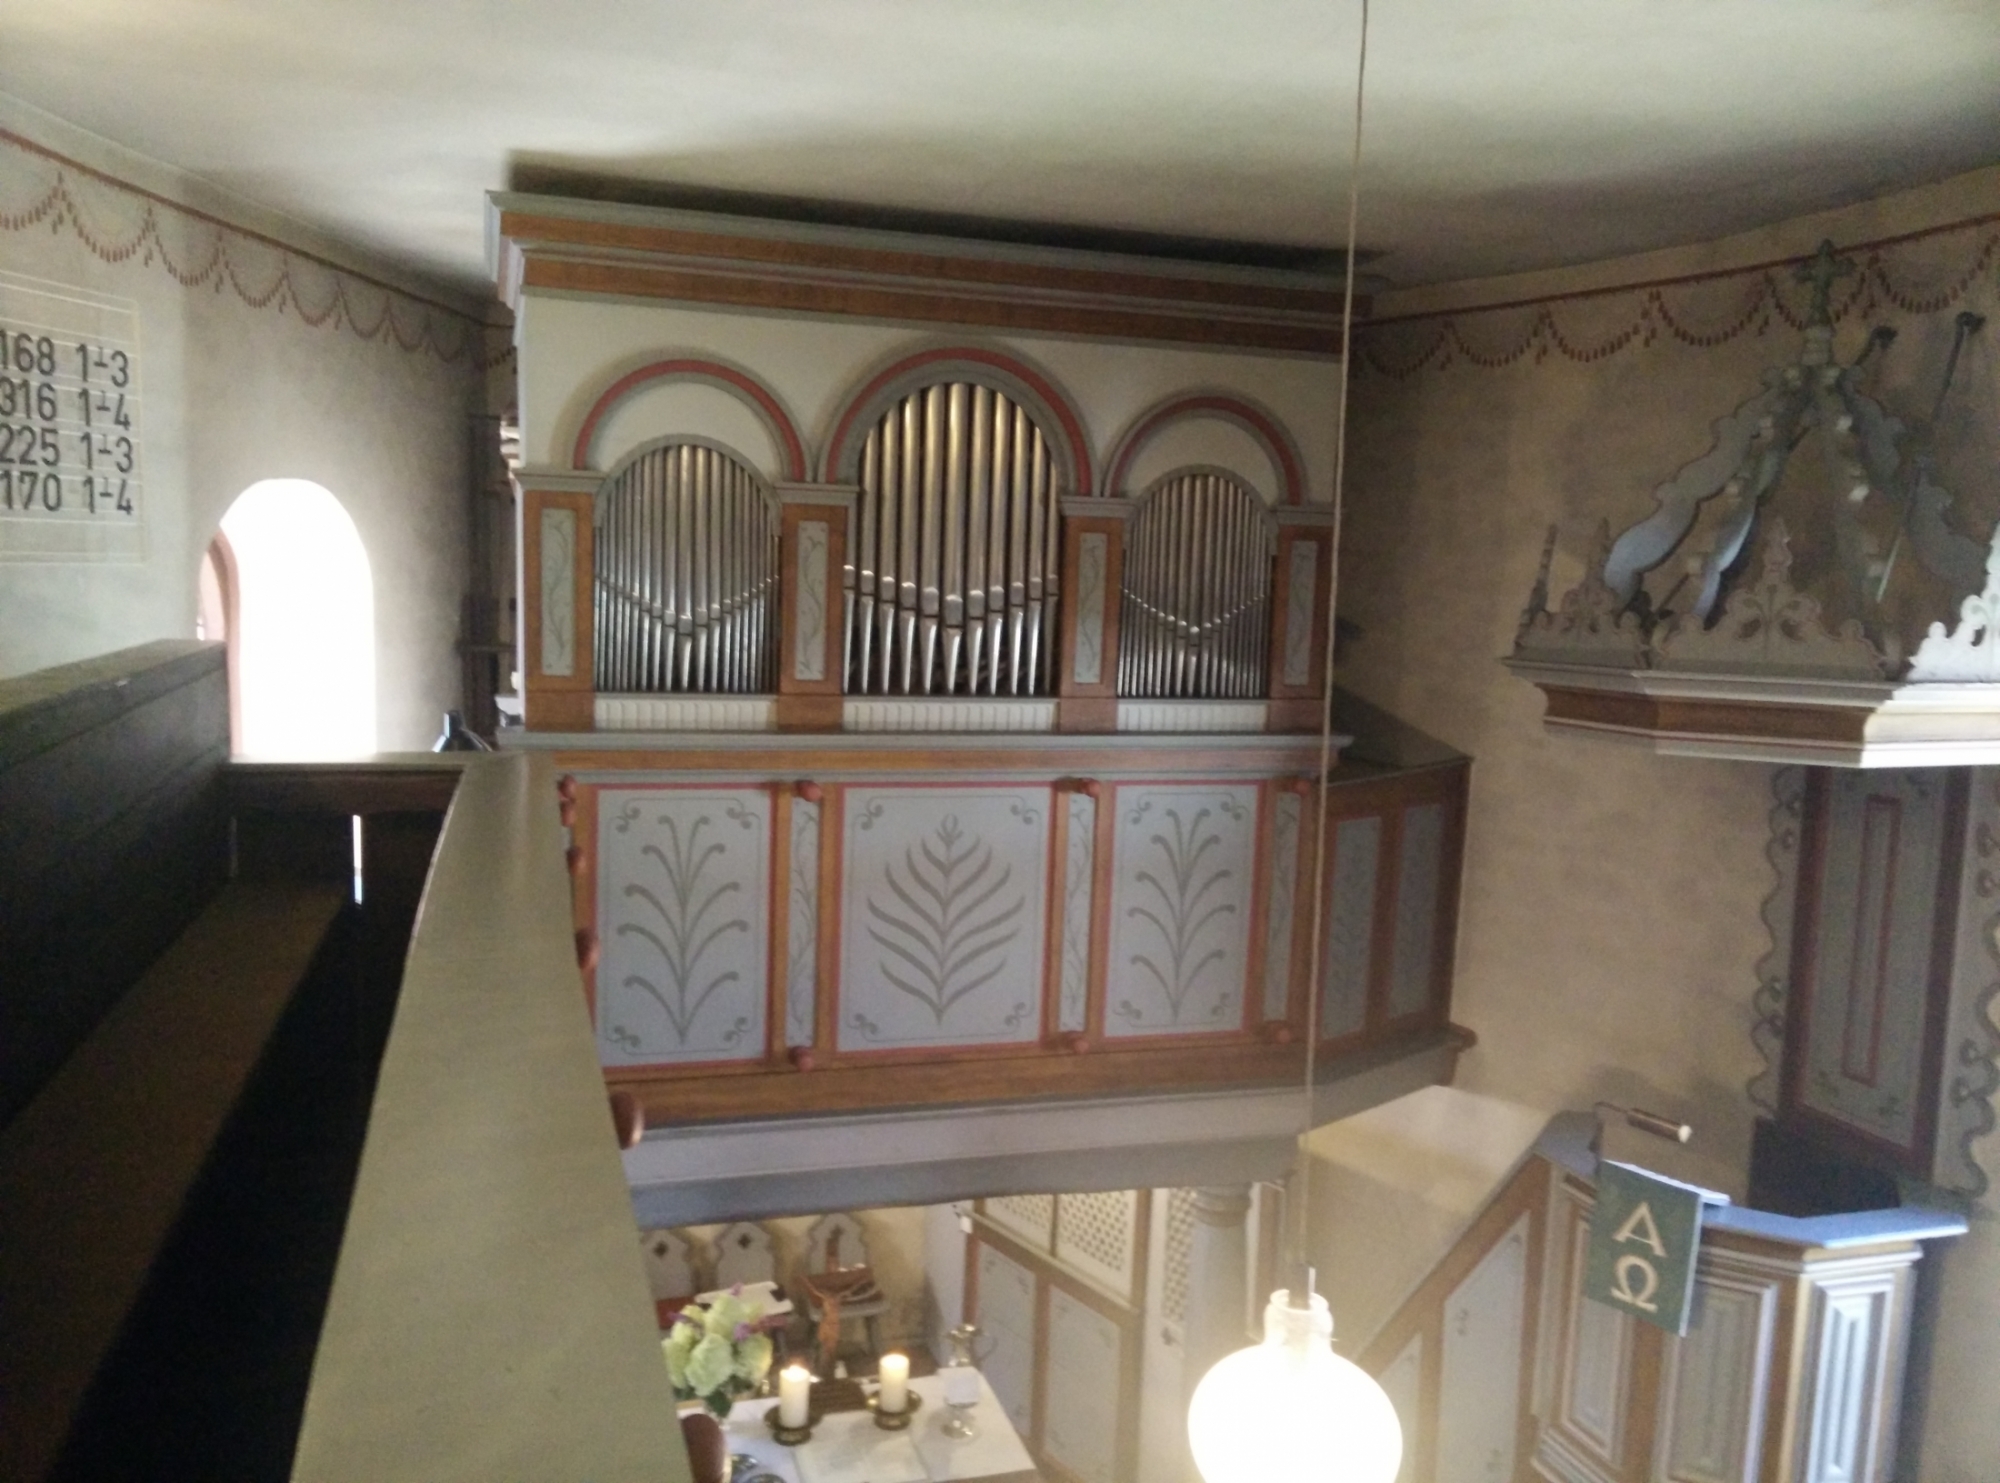 die orgel im kirchenraum